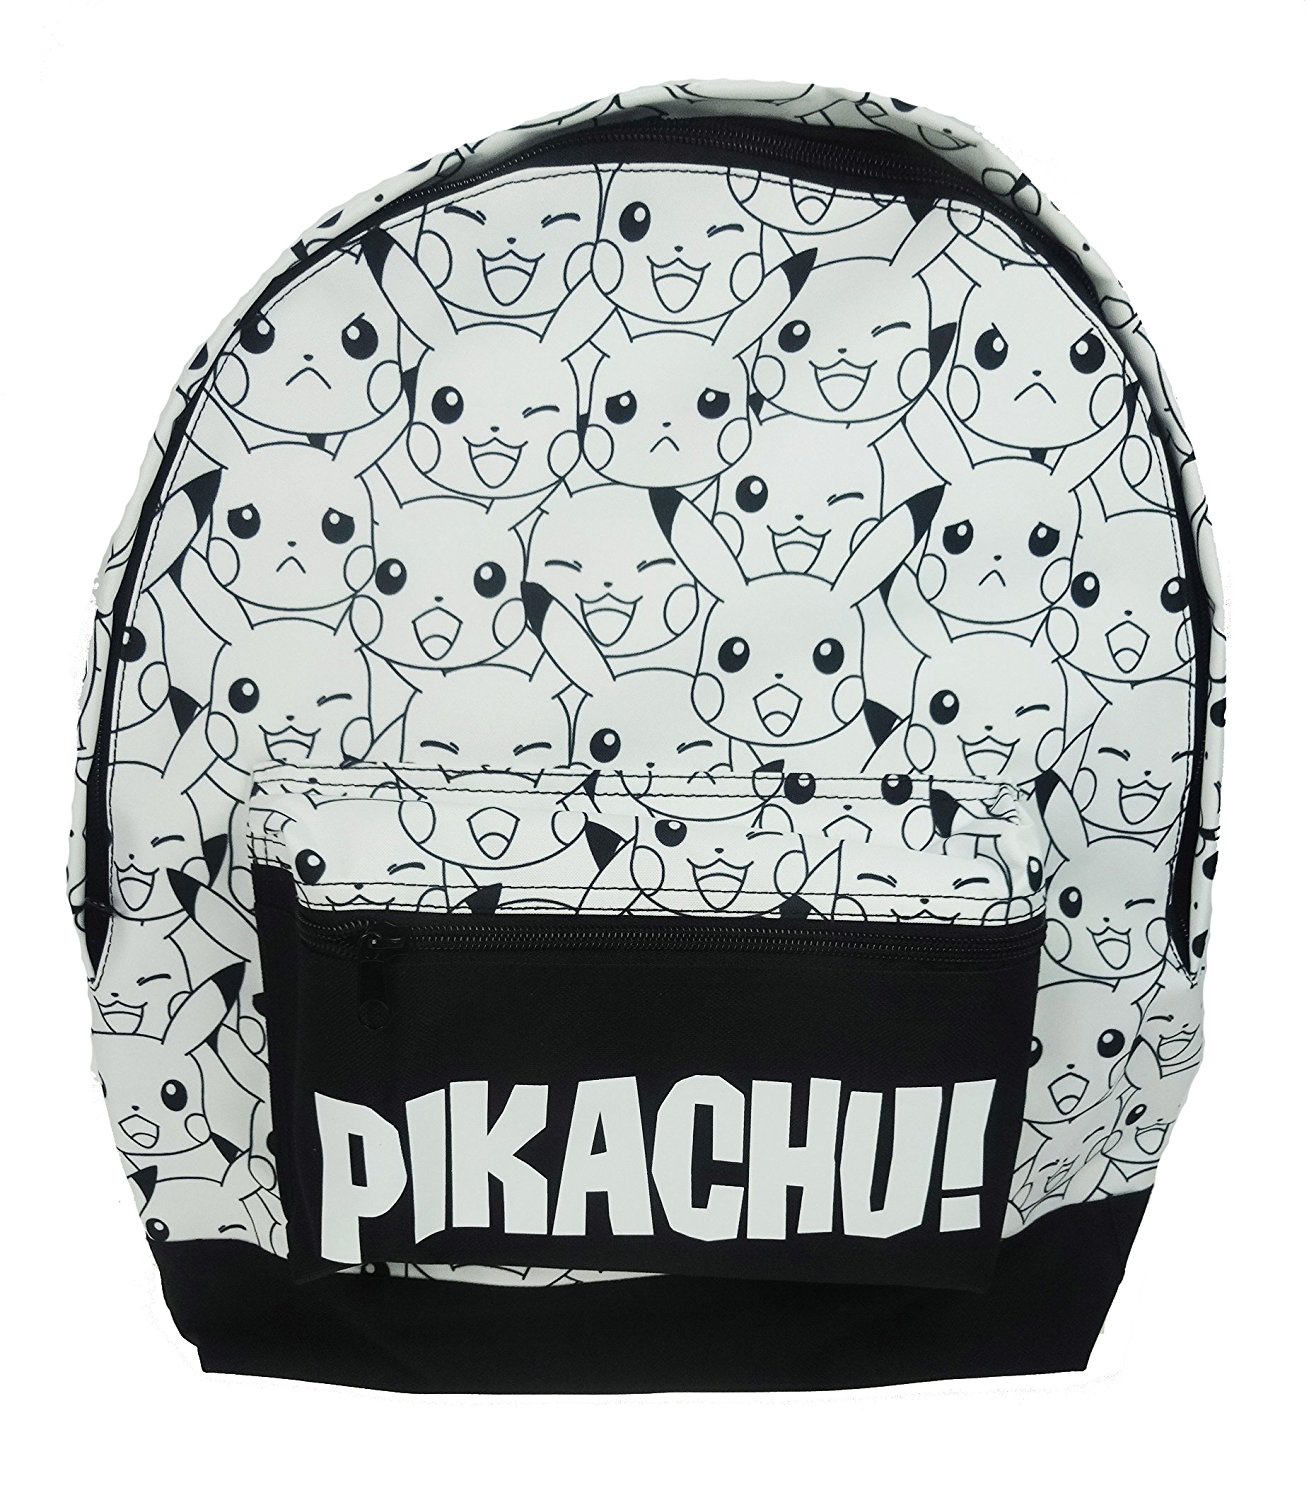 Pokemon 'Pikachu' Roxy School Bag Rucksack Backpack